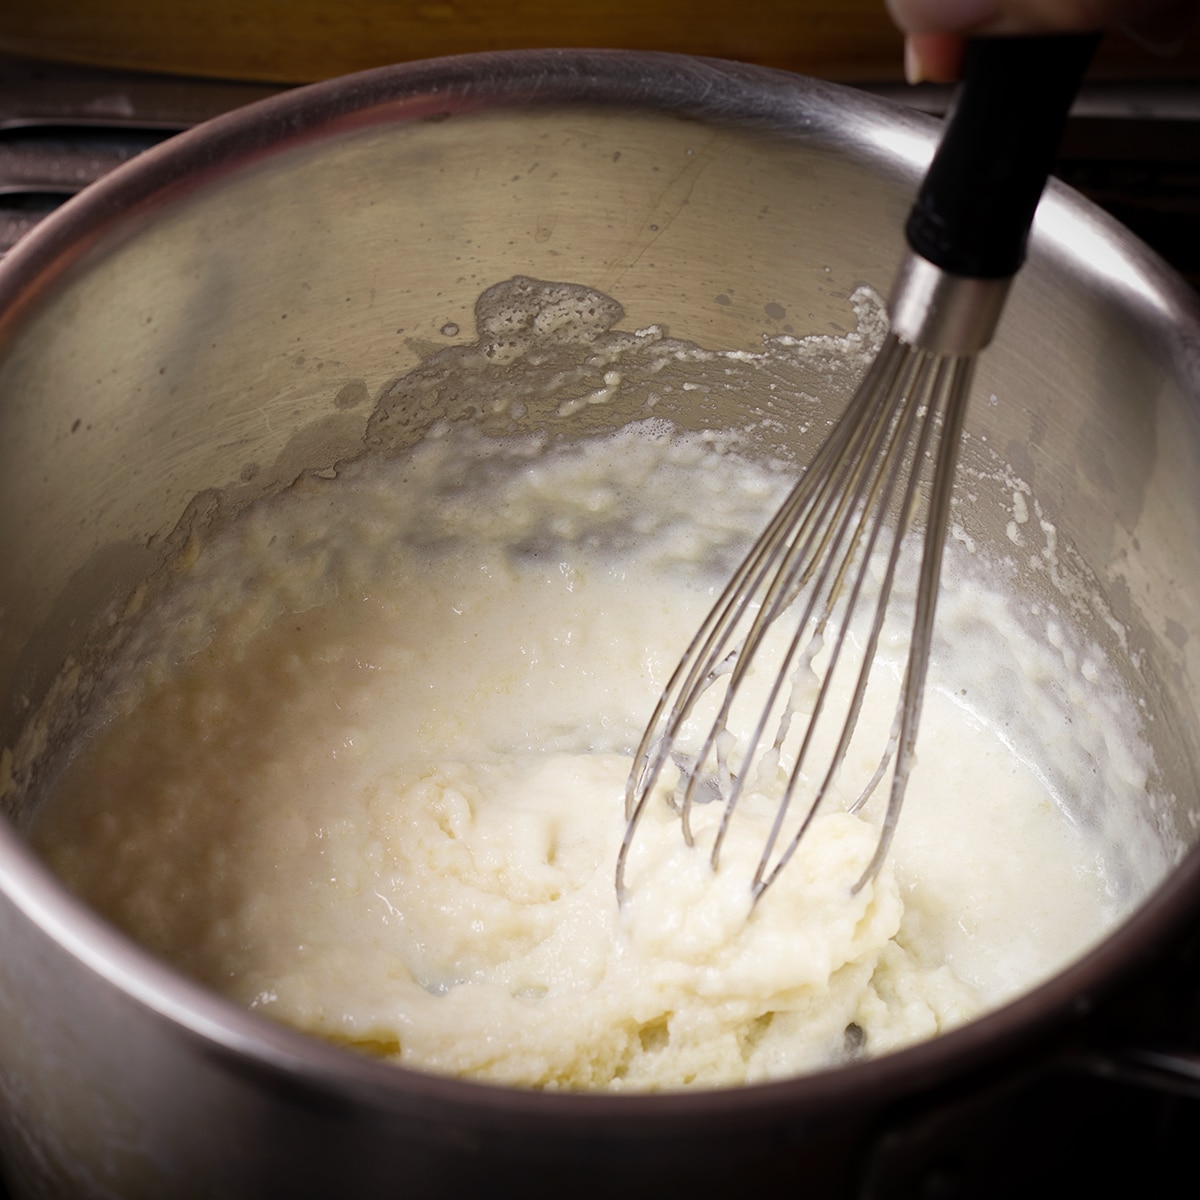 Slowly adding milk to roux in a saucepan to make Béchamel sauce.